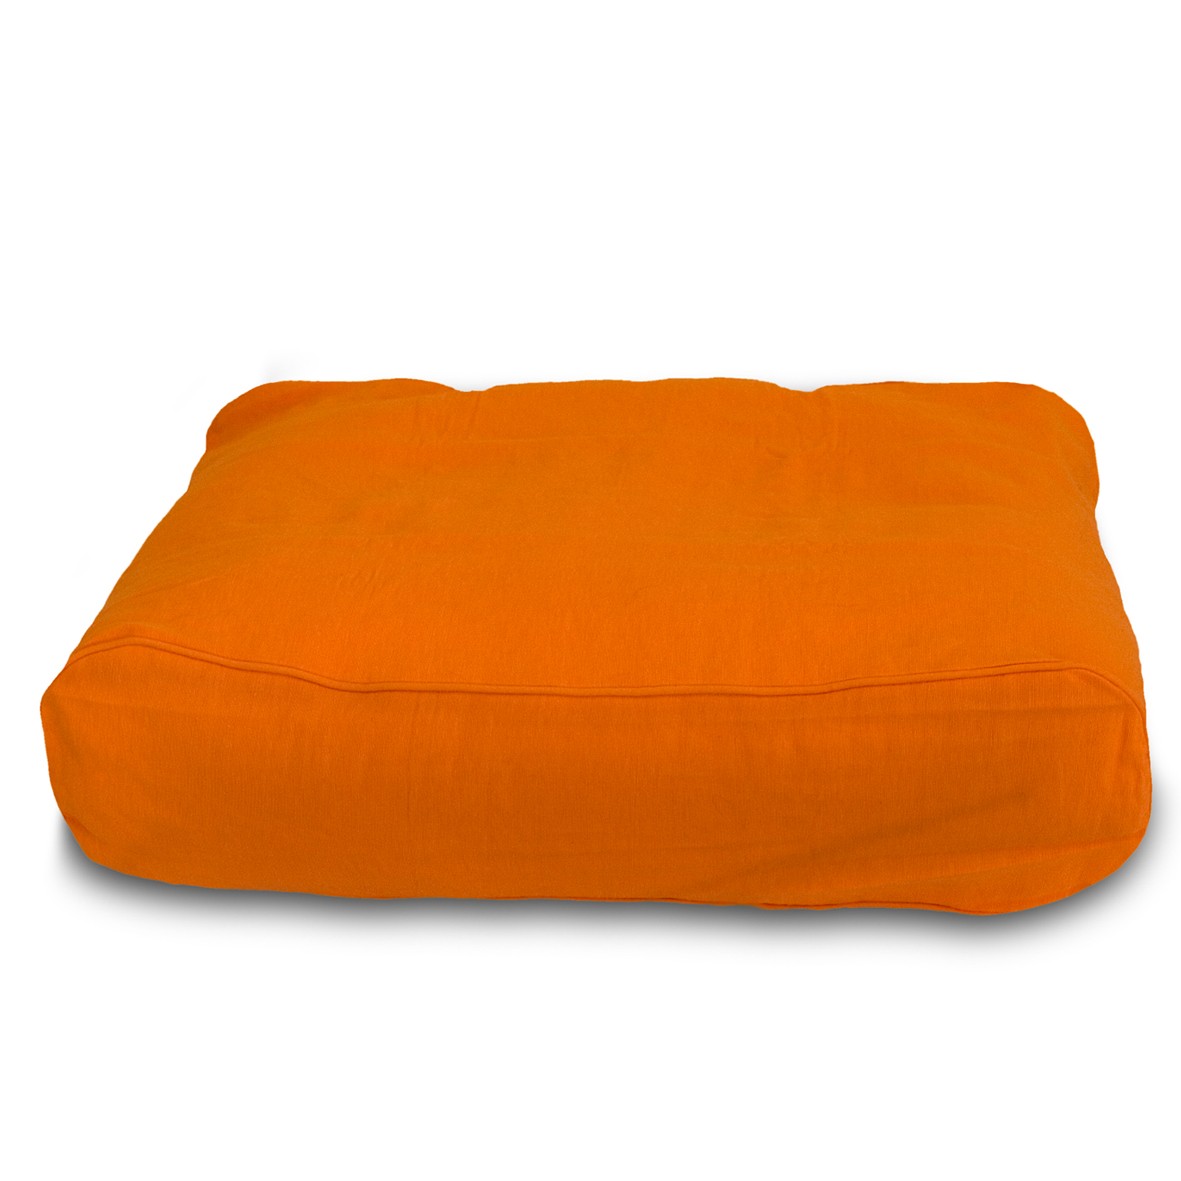 Lex & Max Luxusní potah na pelíšek pro psa Lex & Max Professional 100 x 70 cm | oranžový